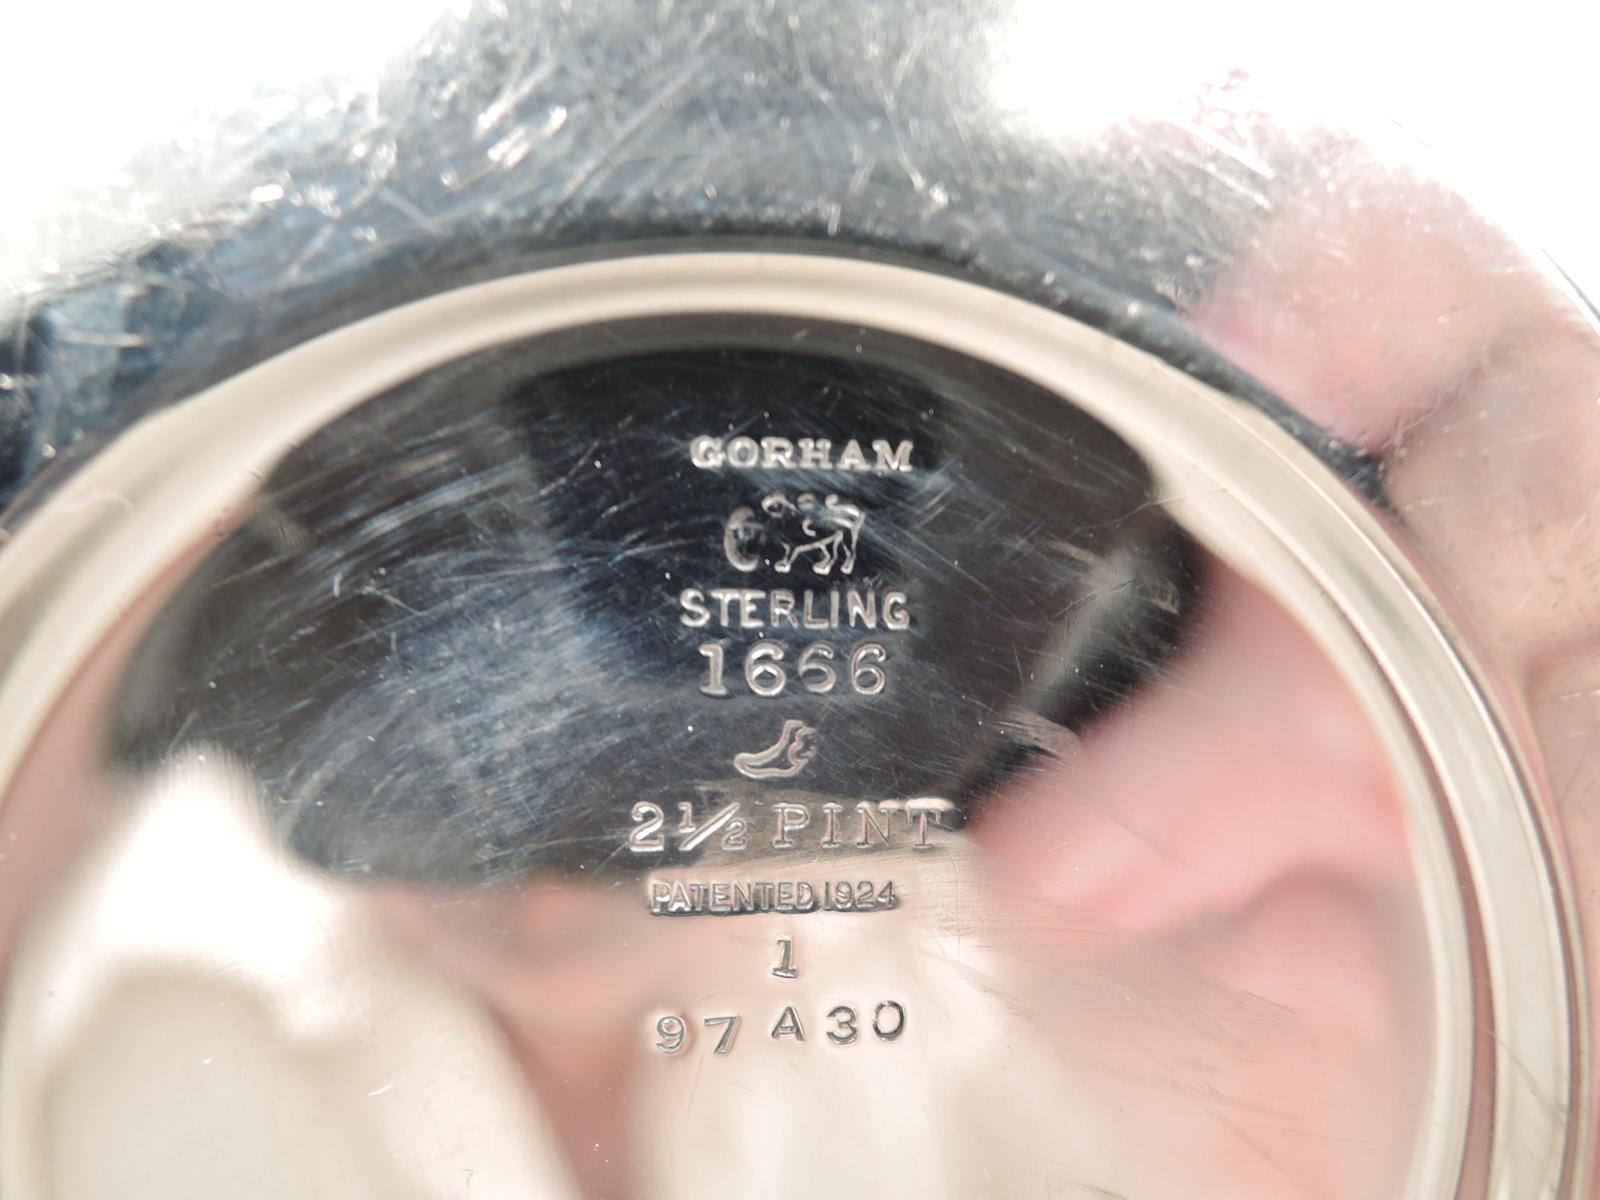 Gorham Prohibition-Era Sterling Silver Cocktail Shaker 2